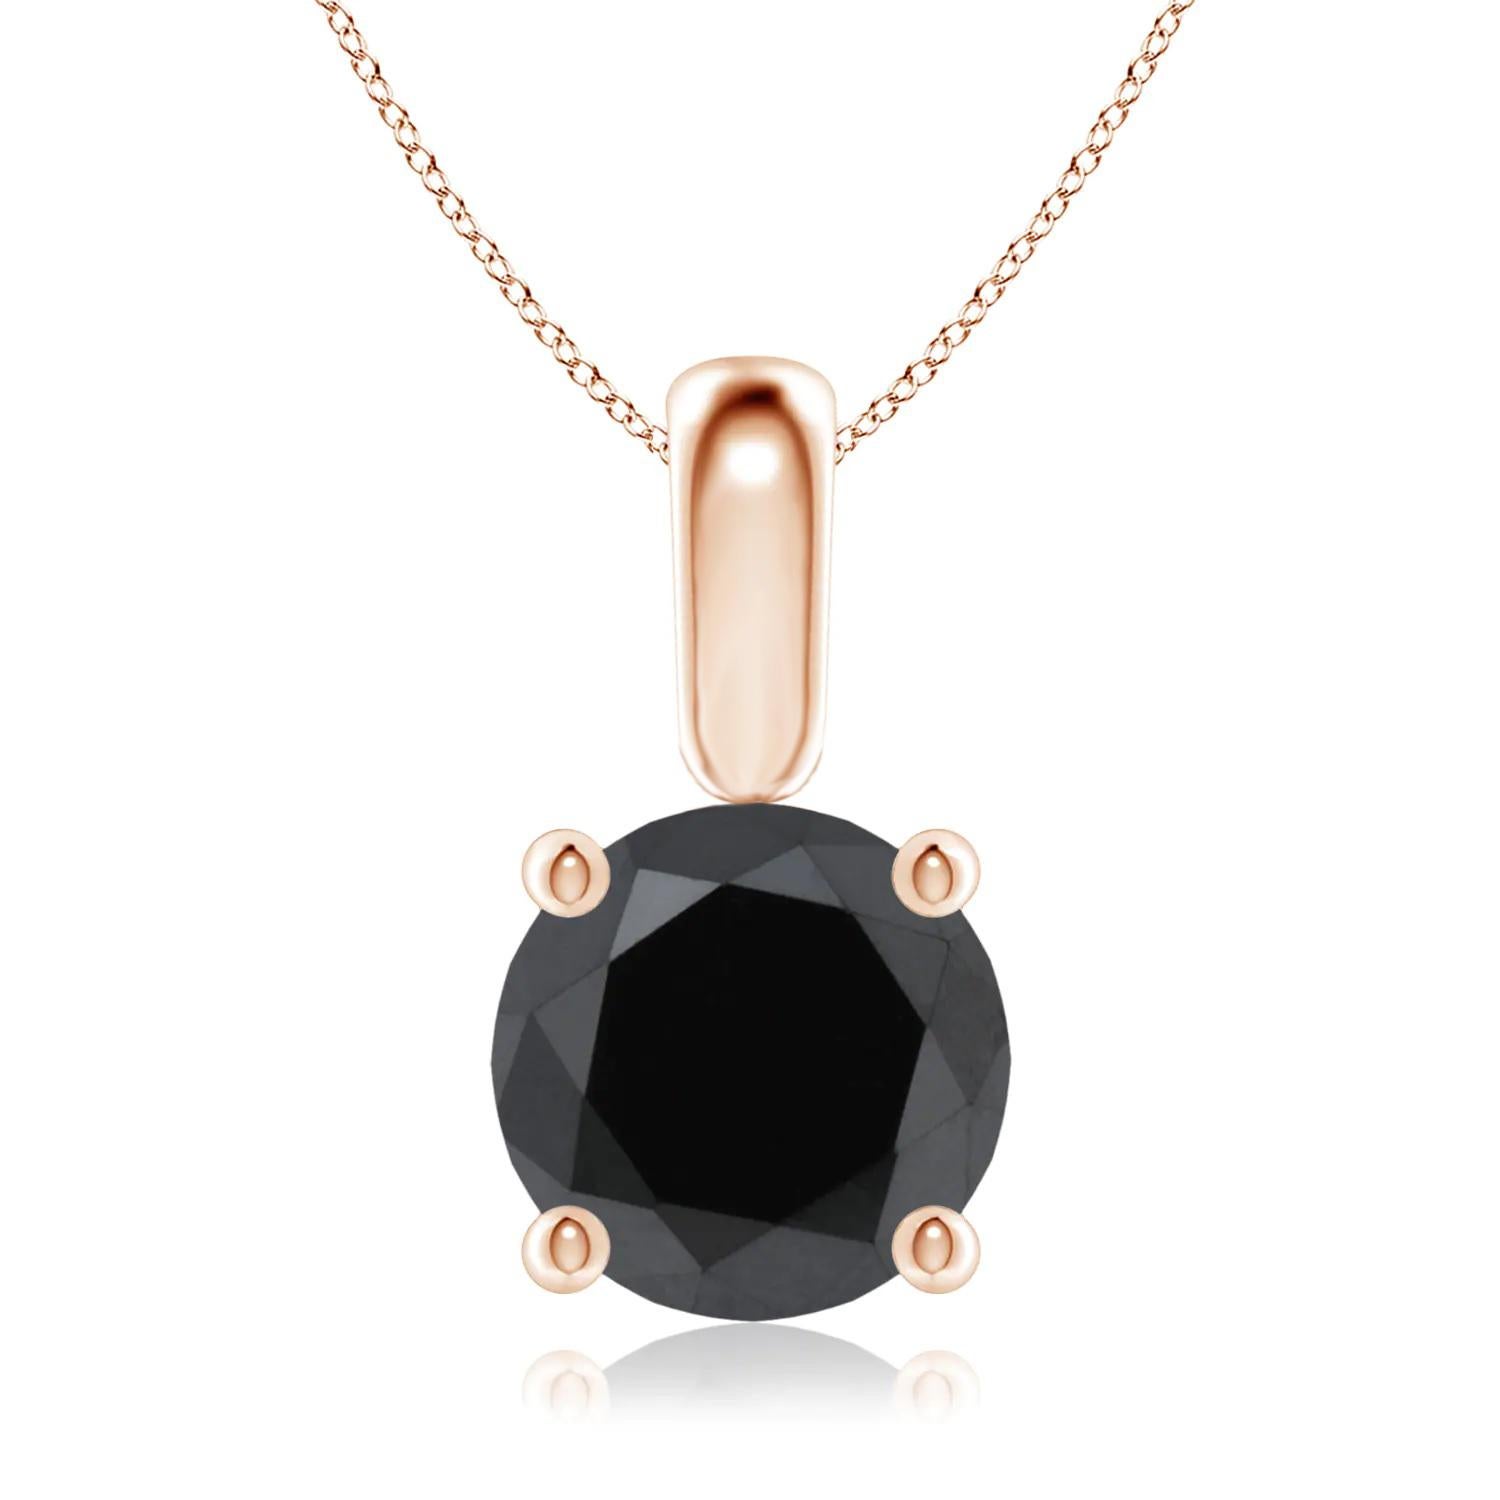 Contemporary 3.13 Carat Round Black Diamond Solitaire Pendant Necklace in 14K Rose Gold